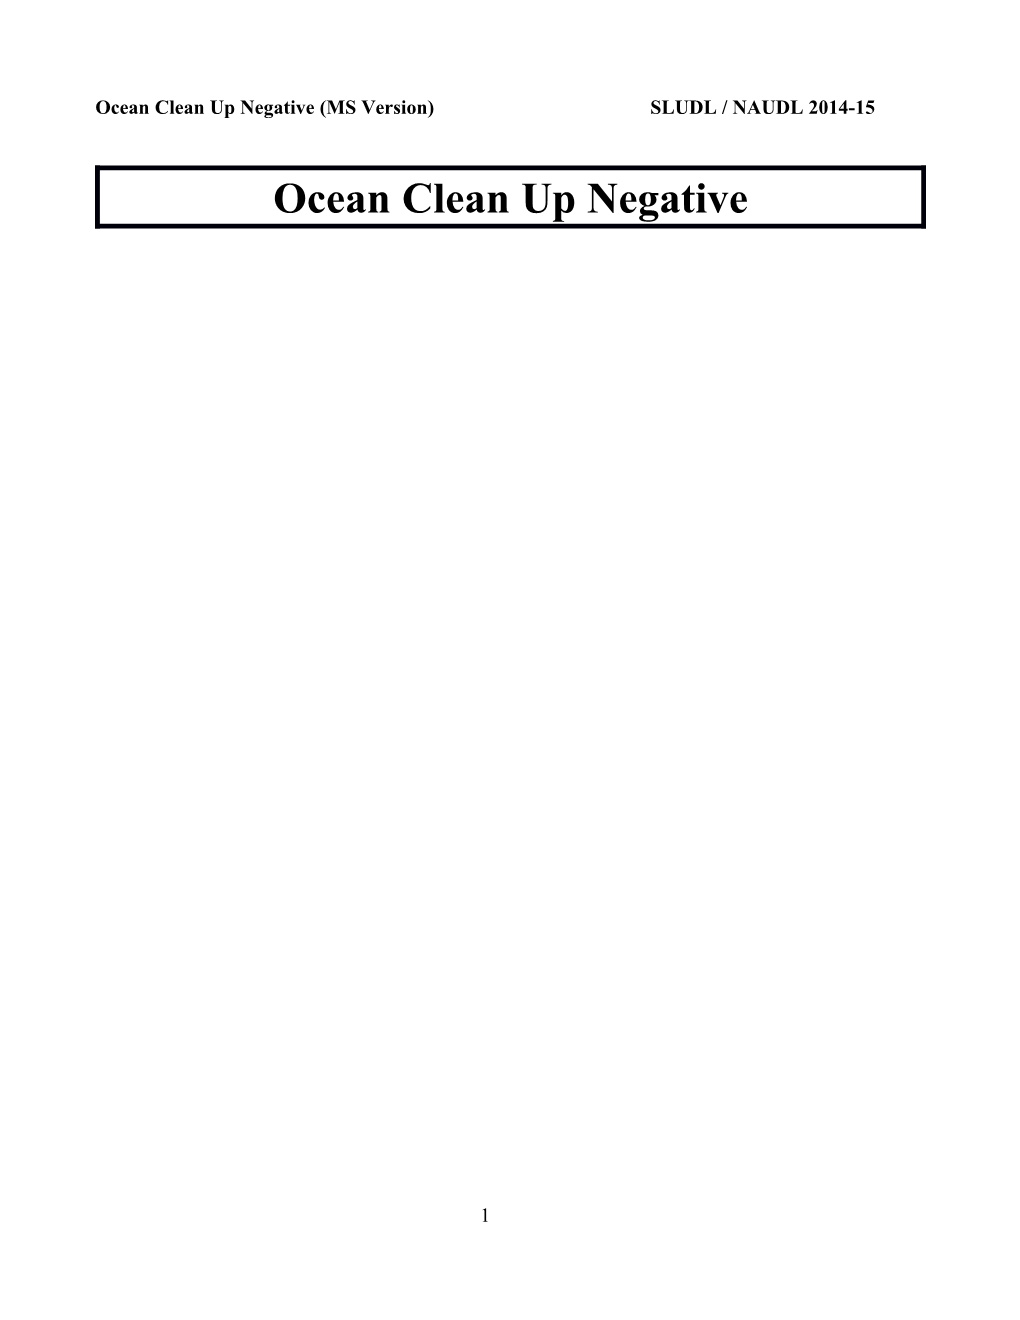 Ocean Clean up Negative (MS Version)SLUDL / NAUDL 2014-15